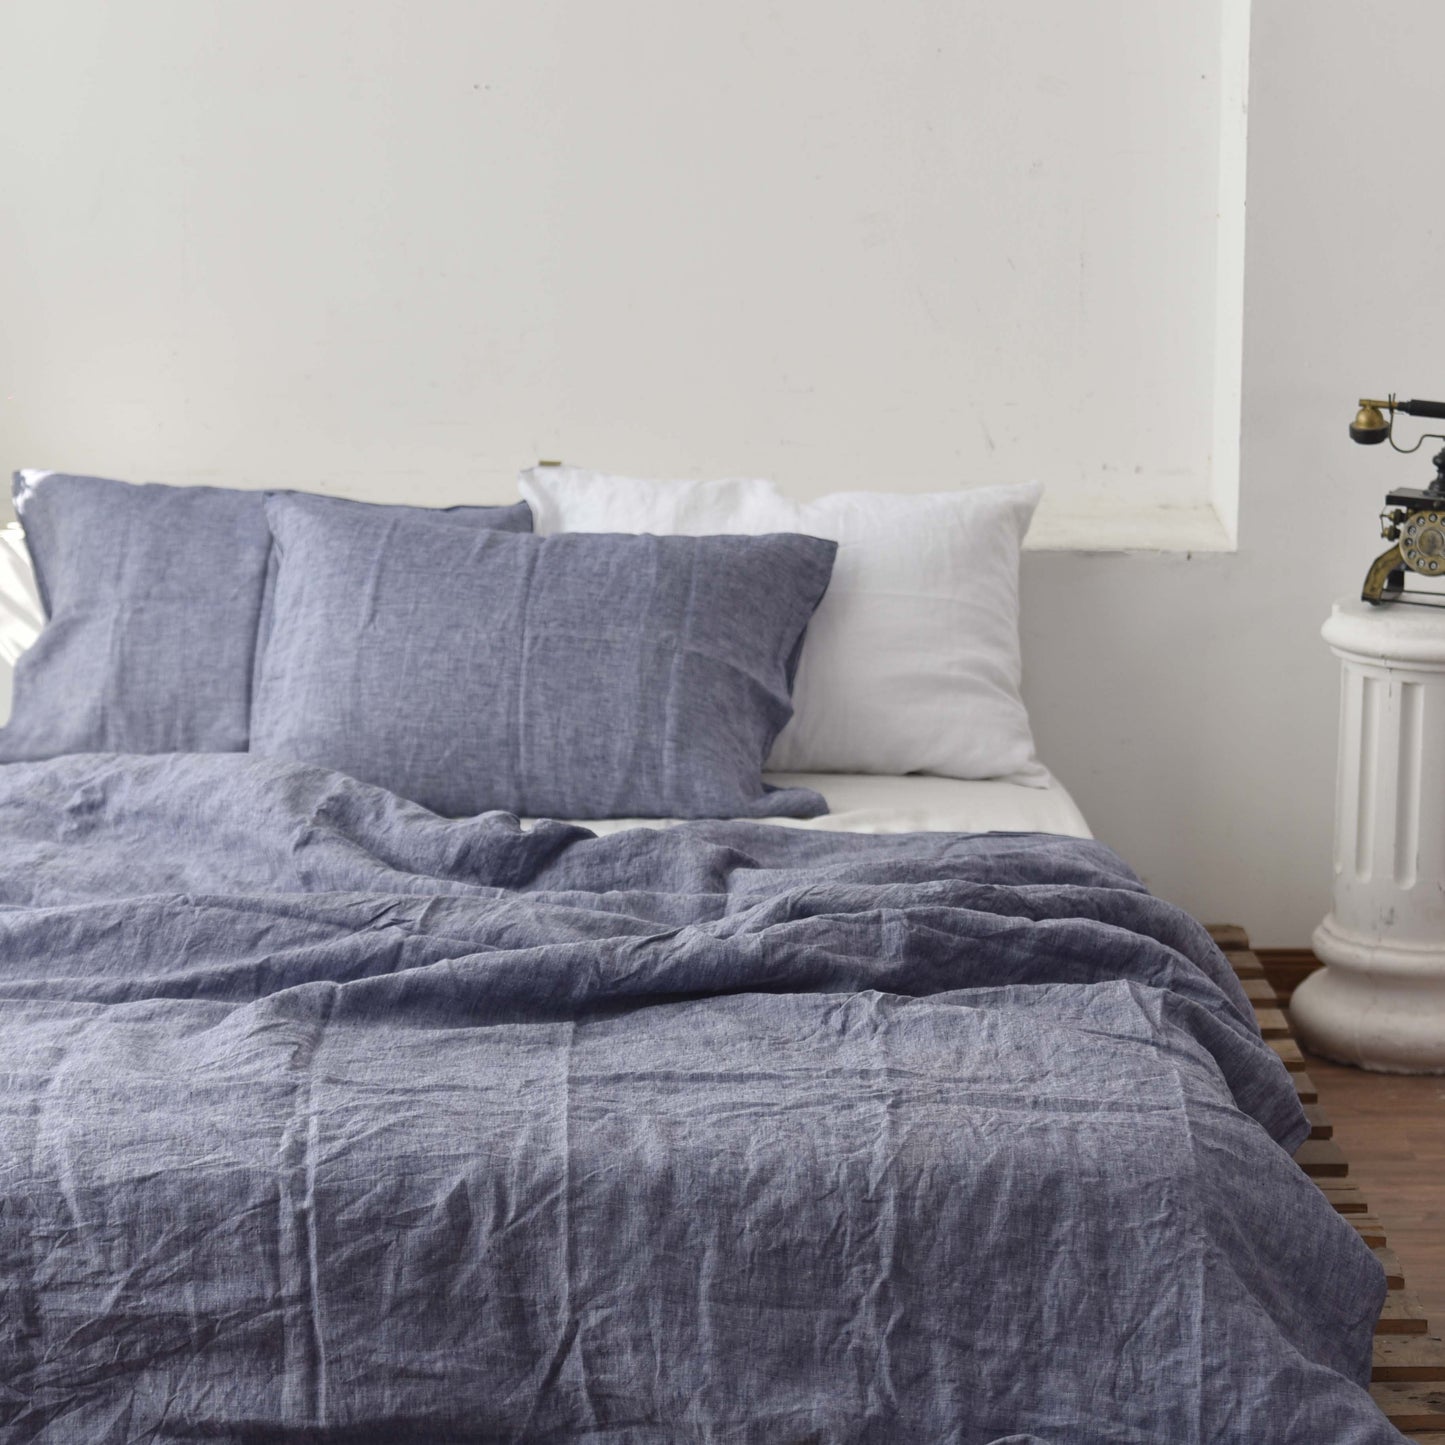 Jean French Linen Duvet Cover+2 Pillowcases Set - Yarn Dyeing 41